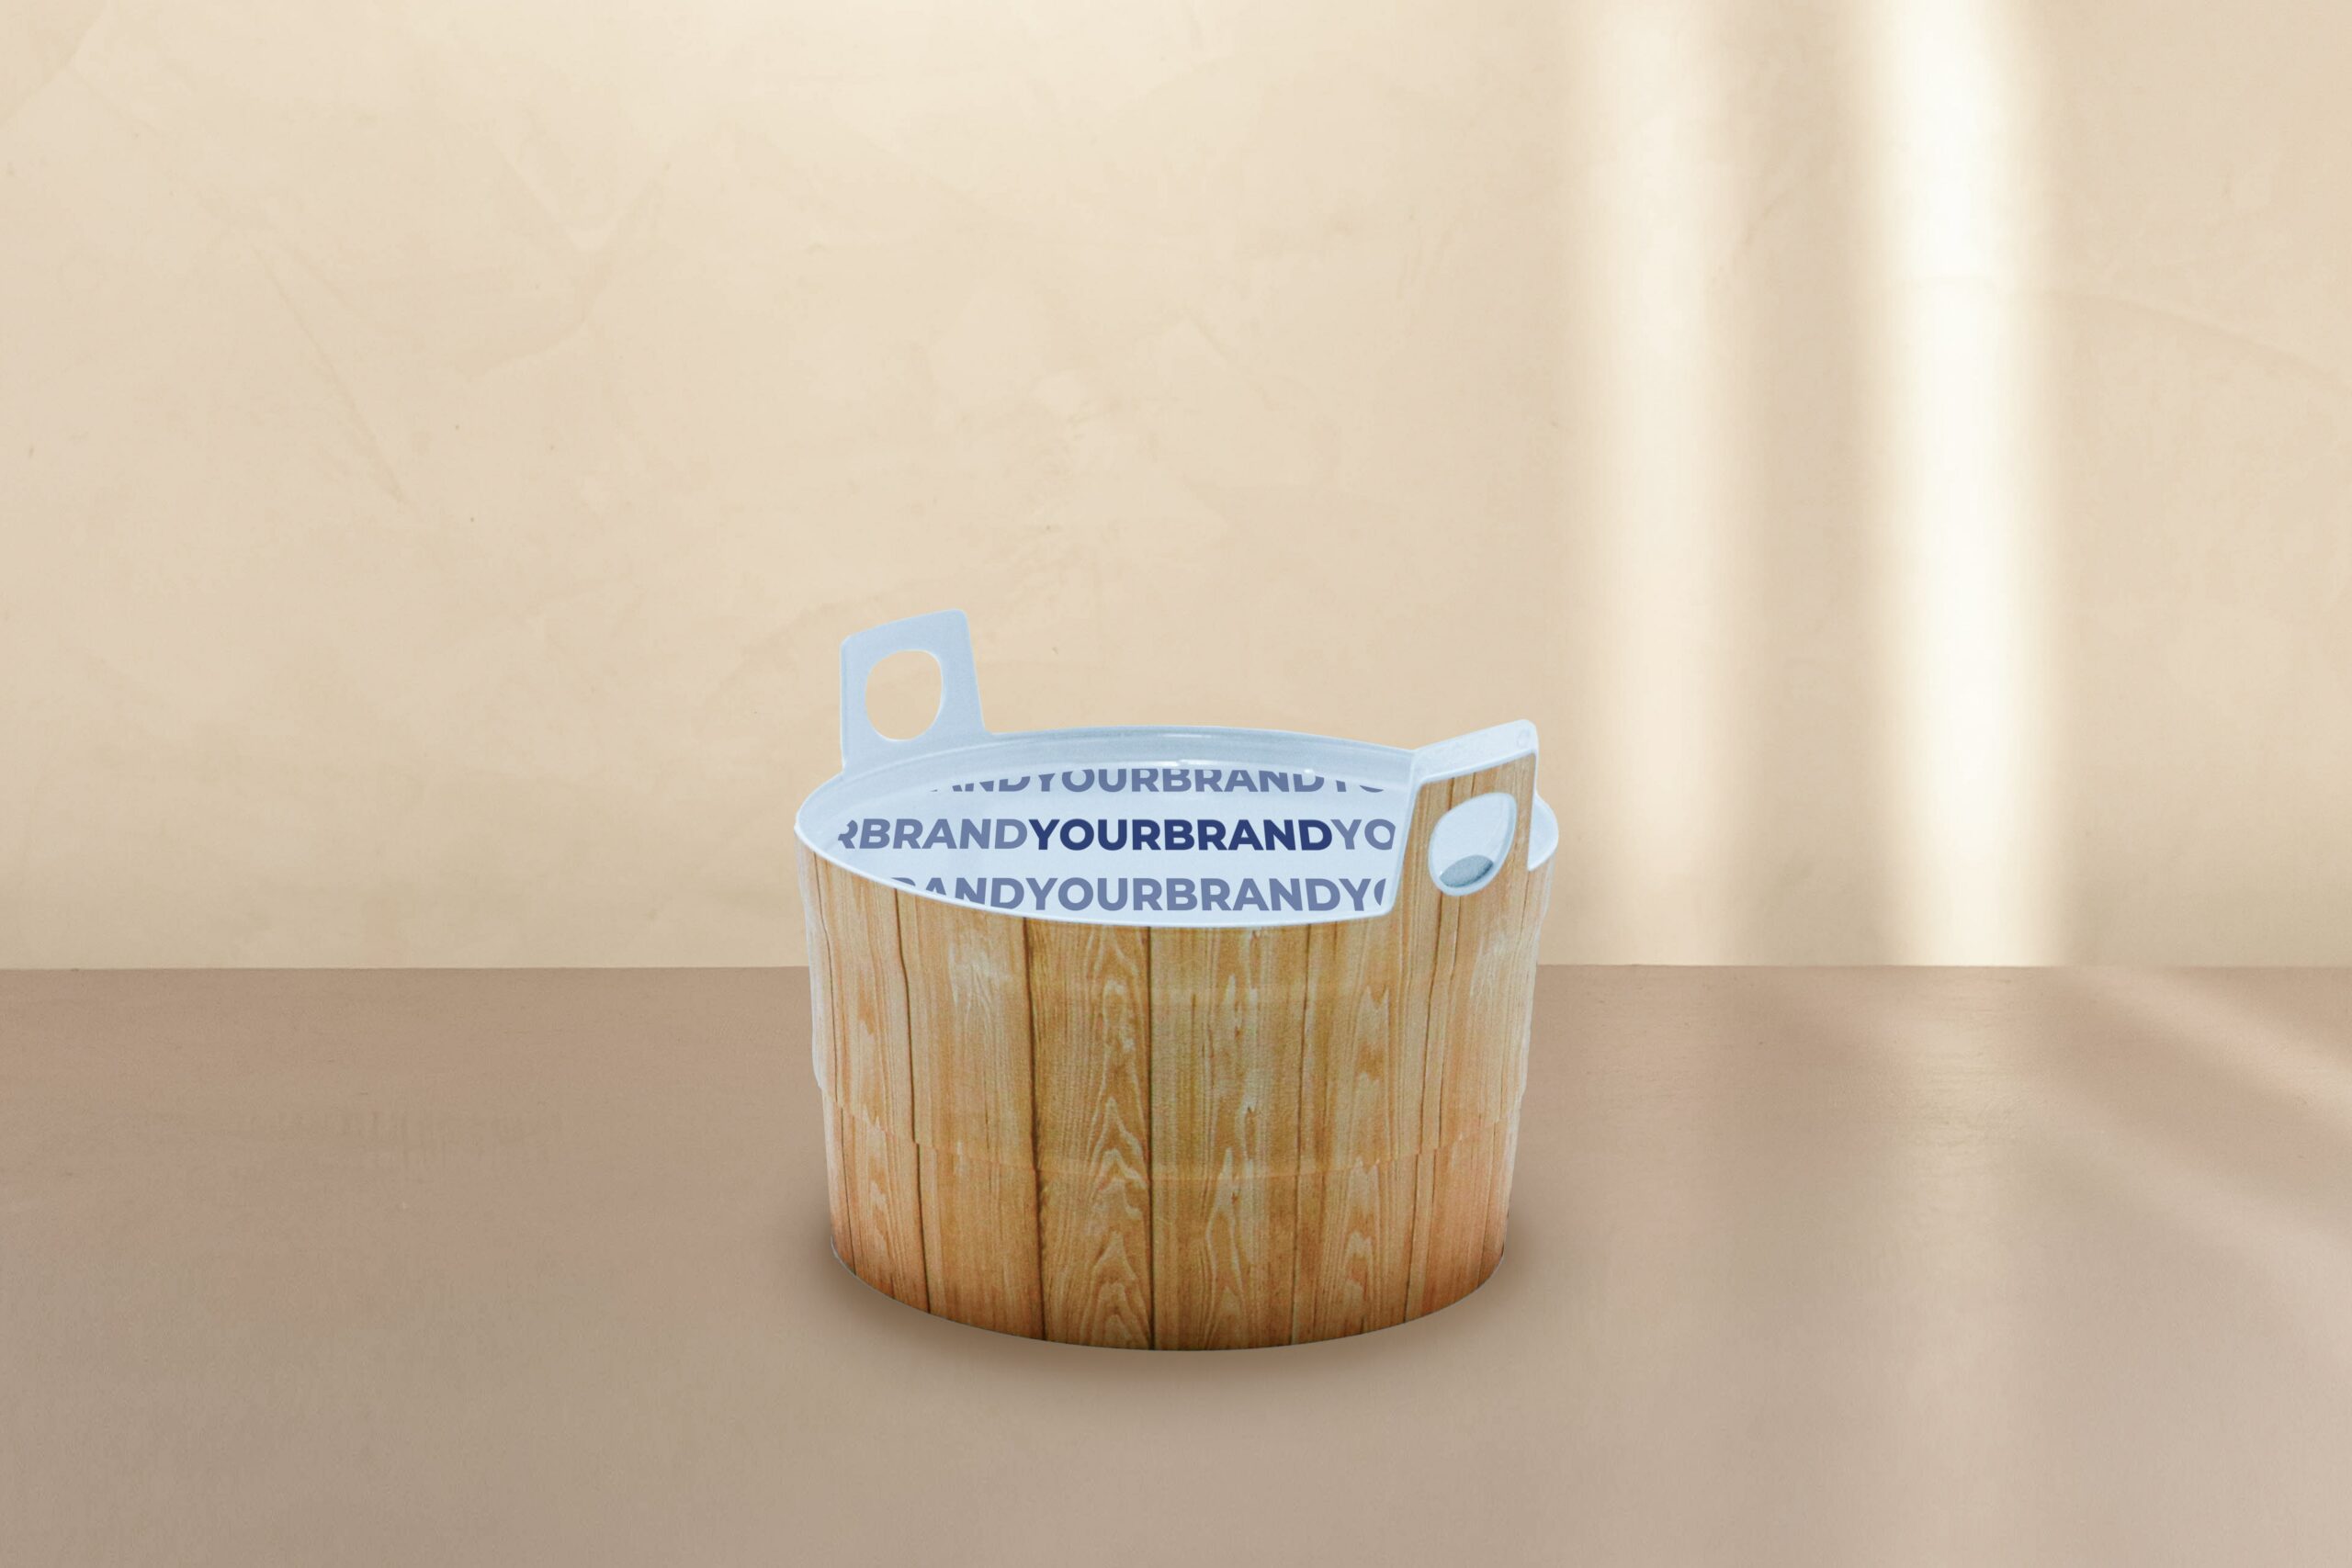 Bavaria cream cheese - private label